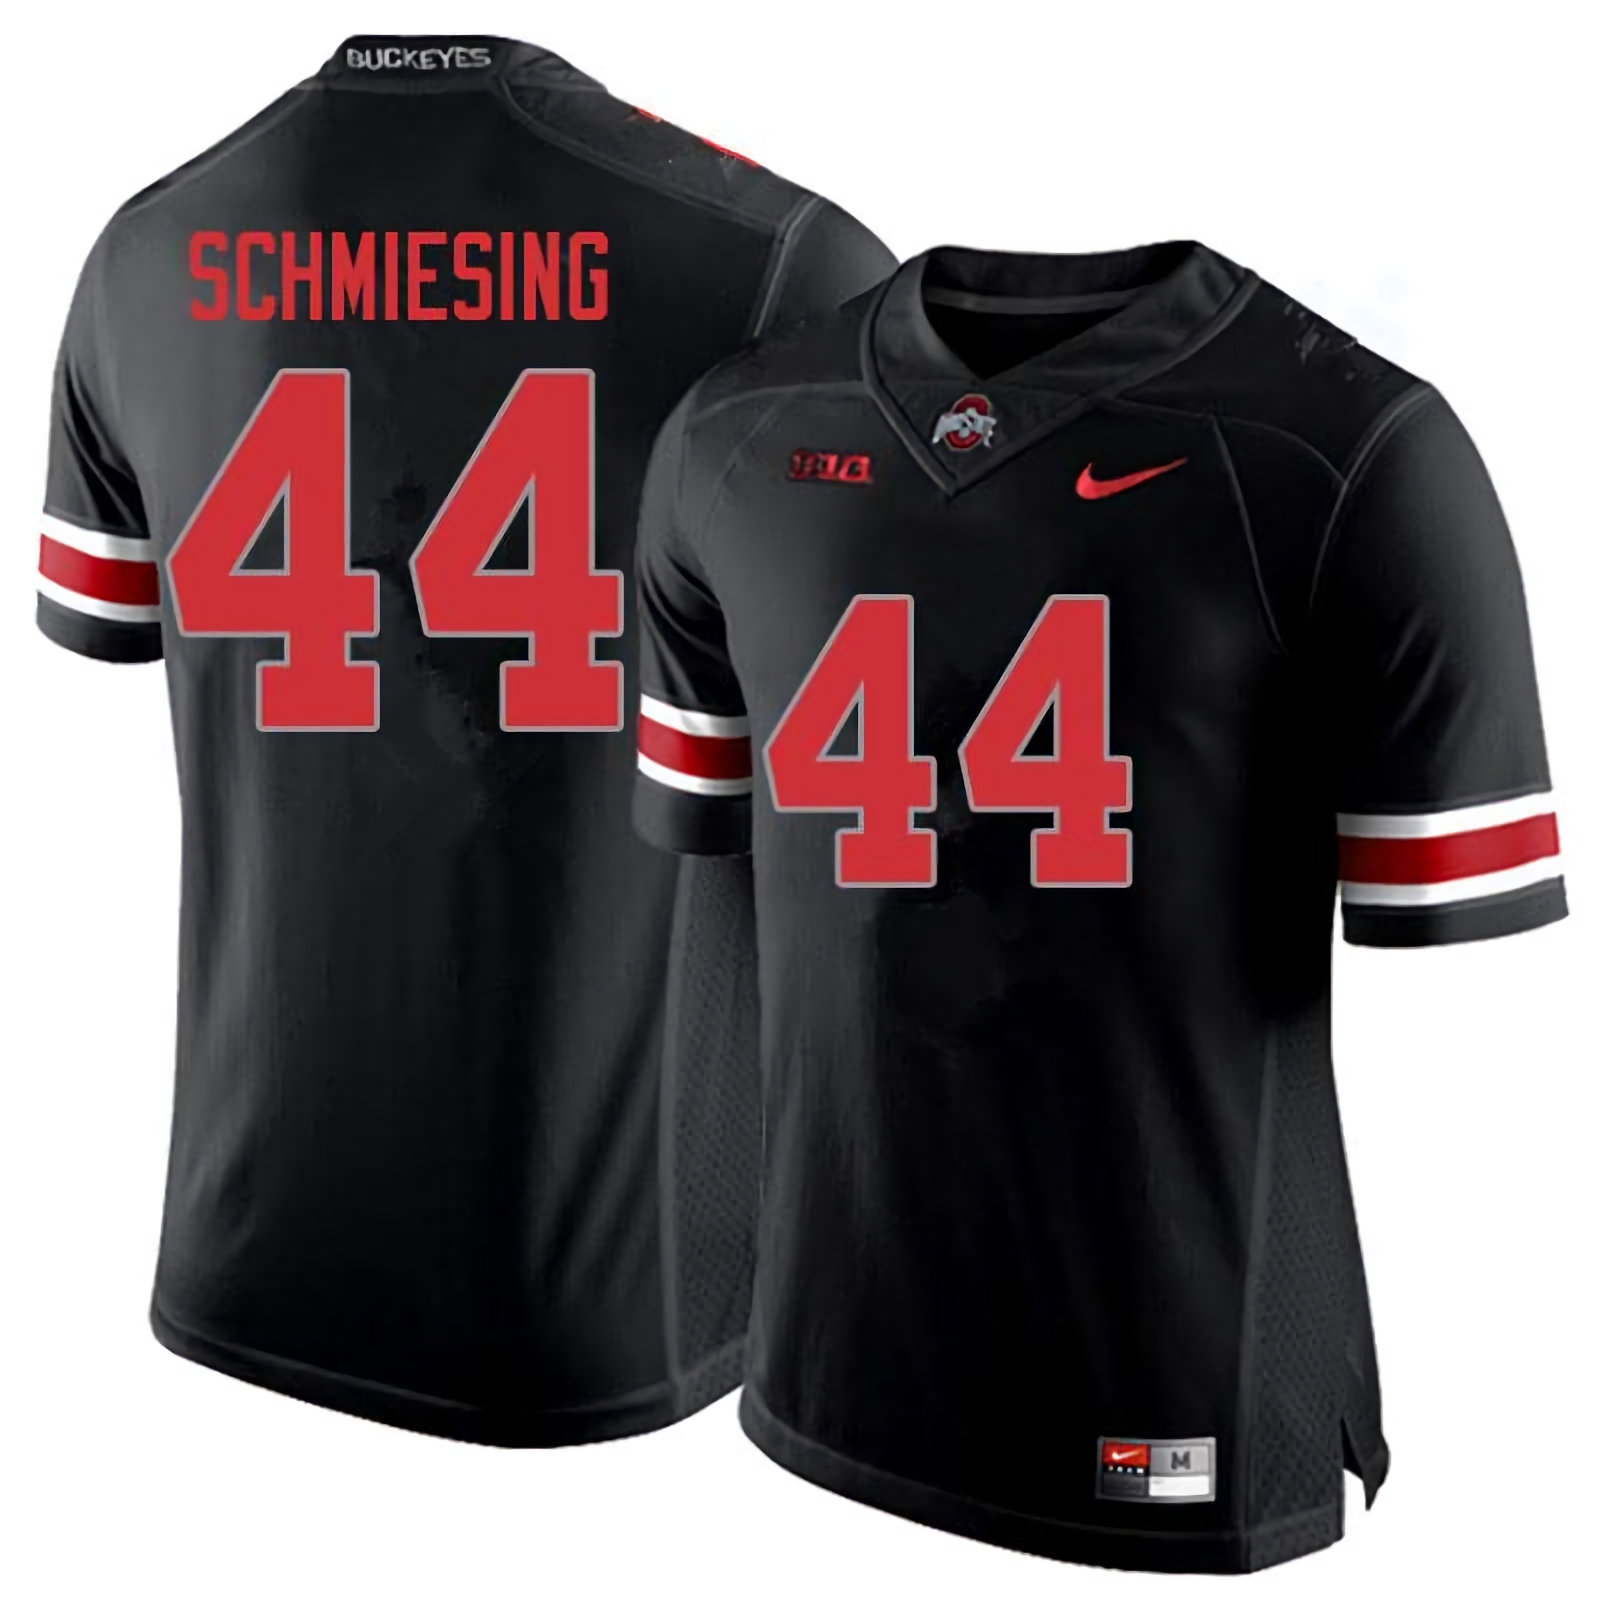 Ben Schmiesing Ohio State Buckeyes Men's NCAA #44 Nike Blackout College Stitched Football Jersey OBI7456US